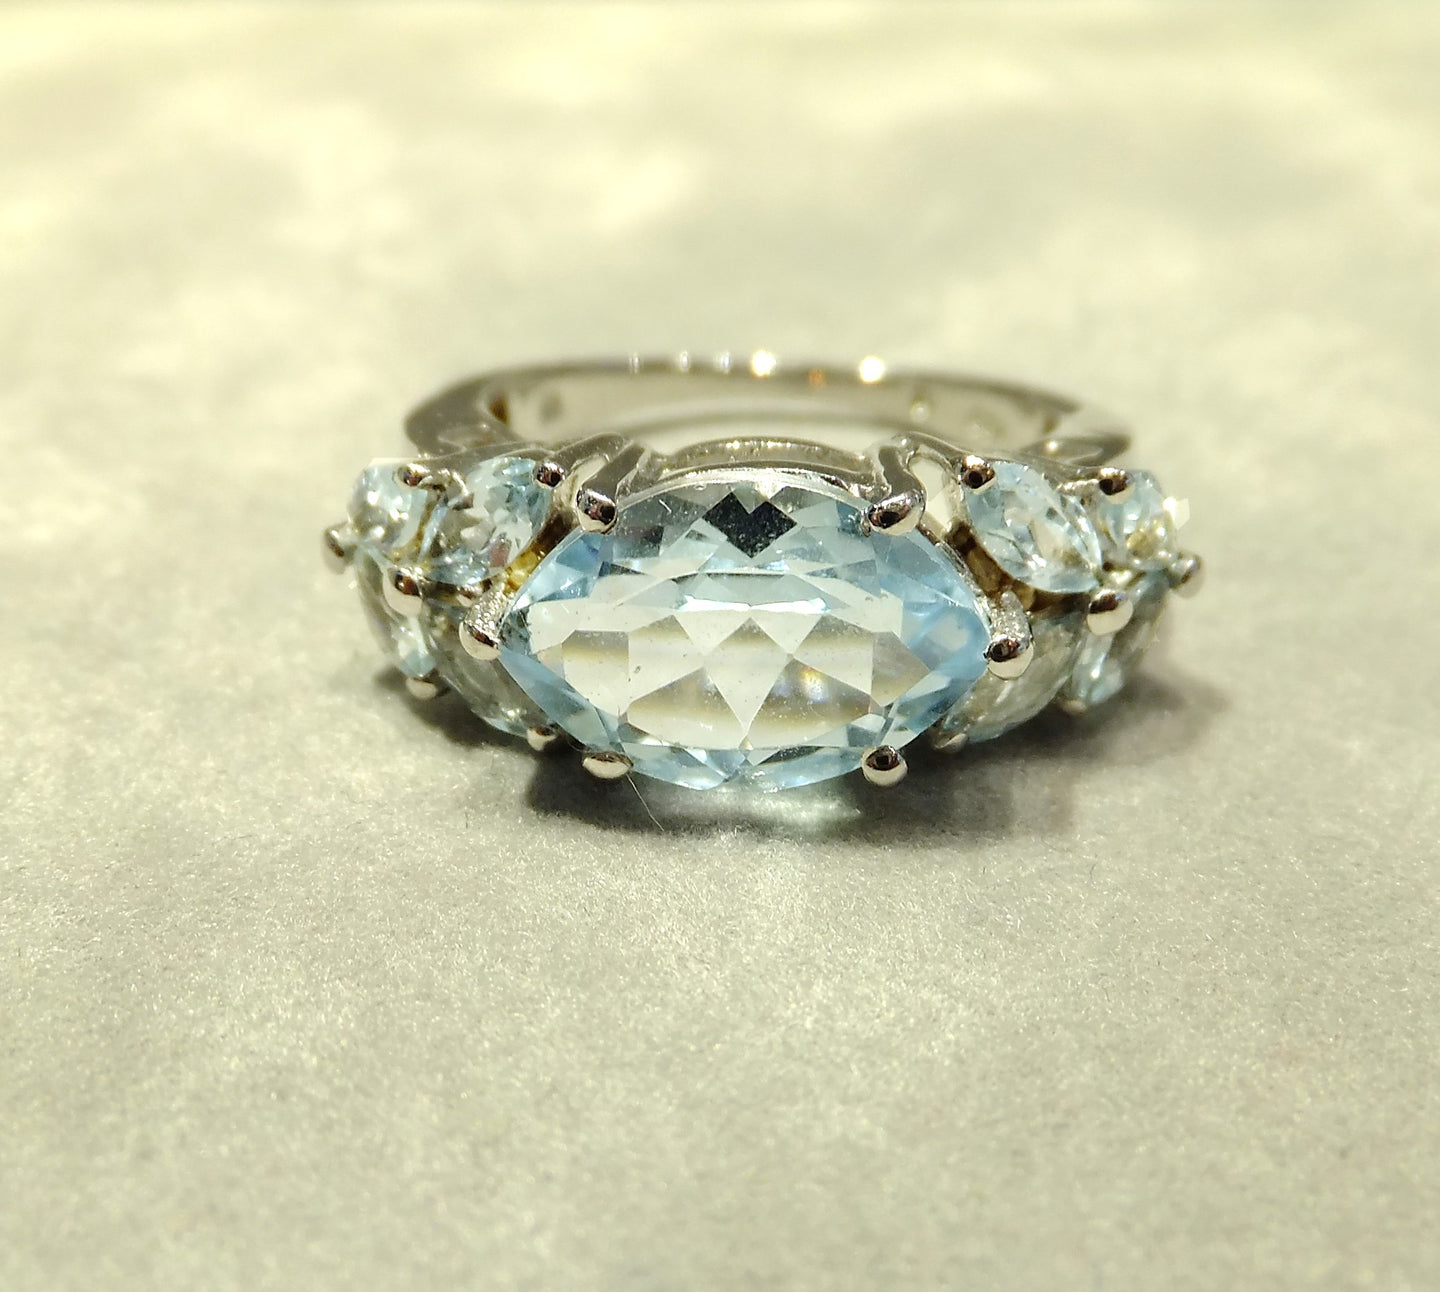 Blue topaz cluster gemstone ring